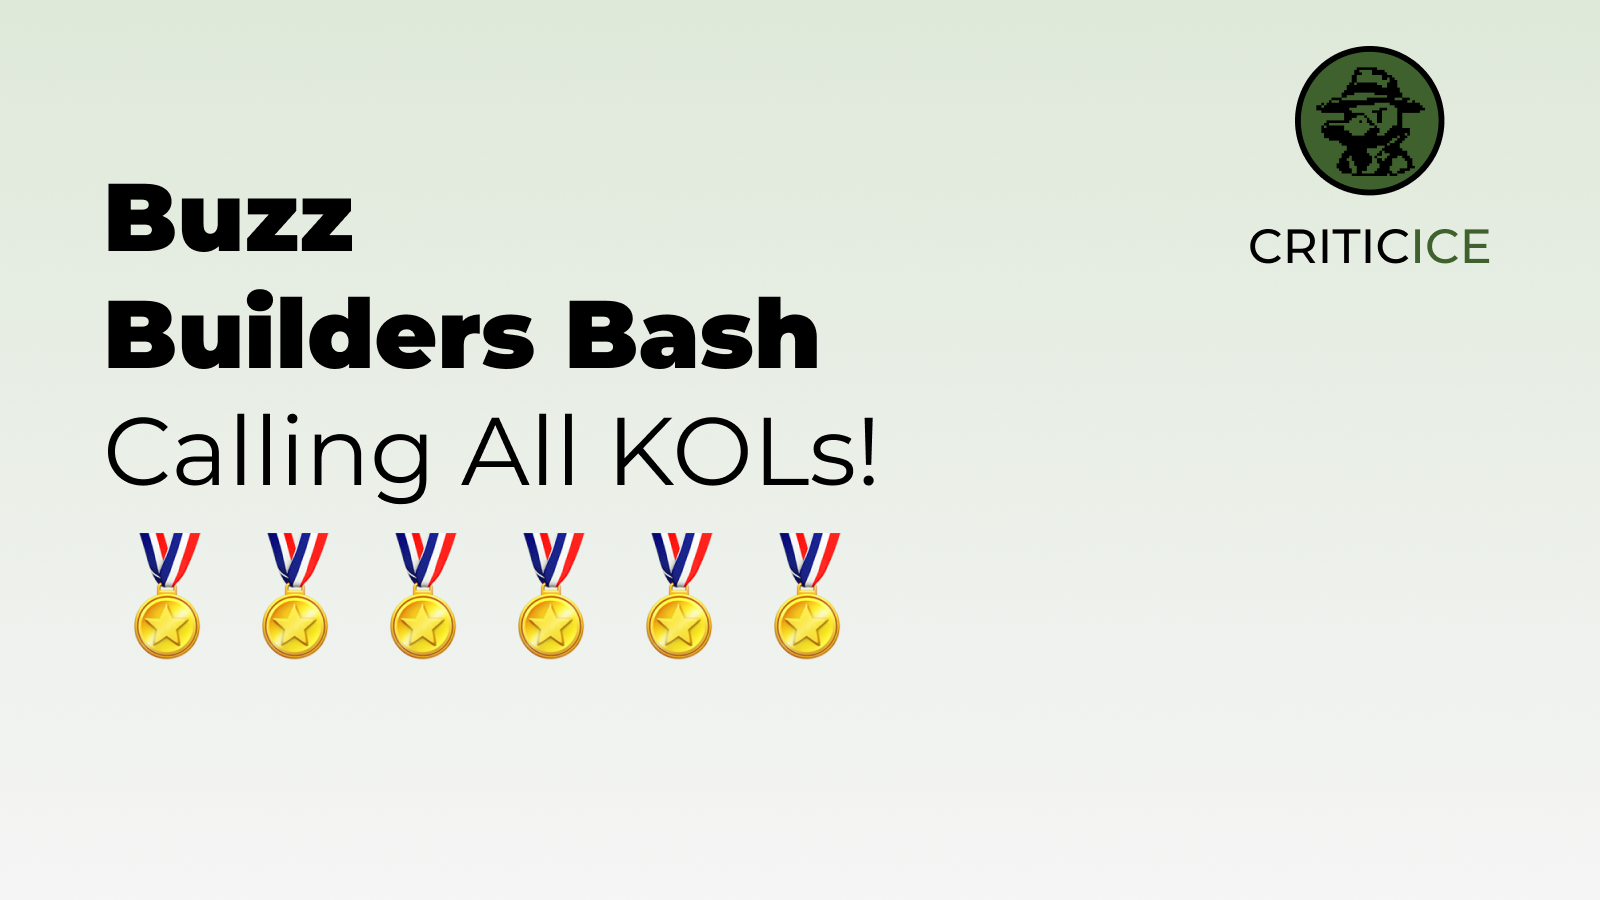 CRITICICE Buzz Builders Bash: Calling All KOLs!